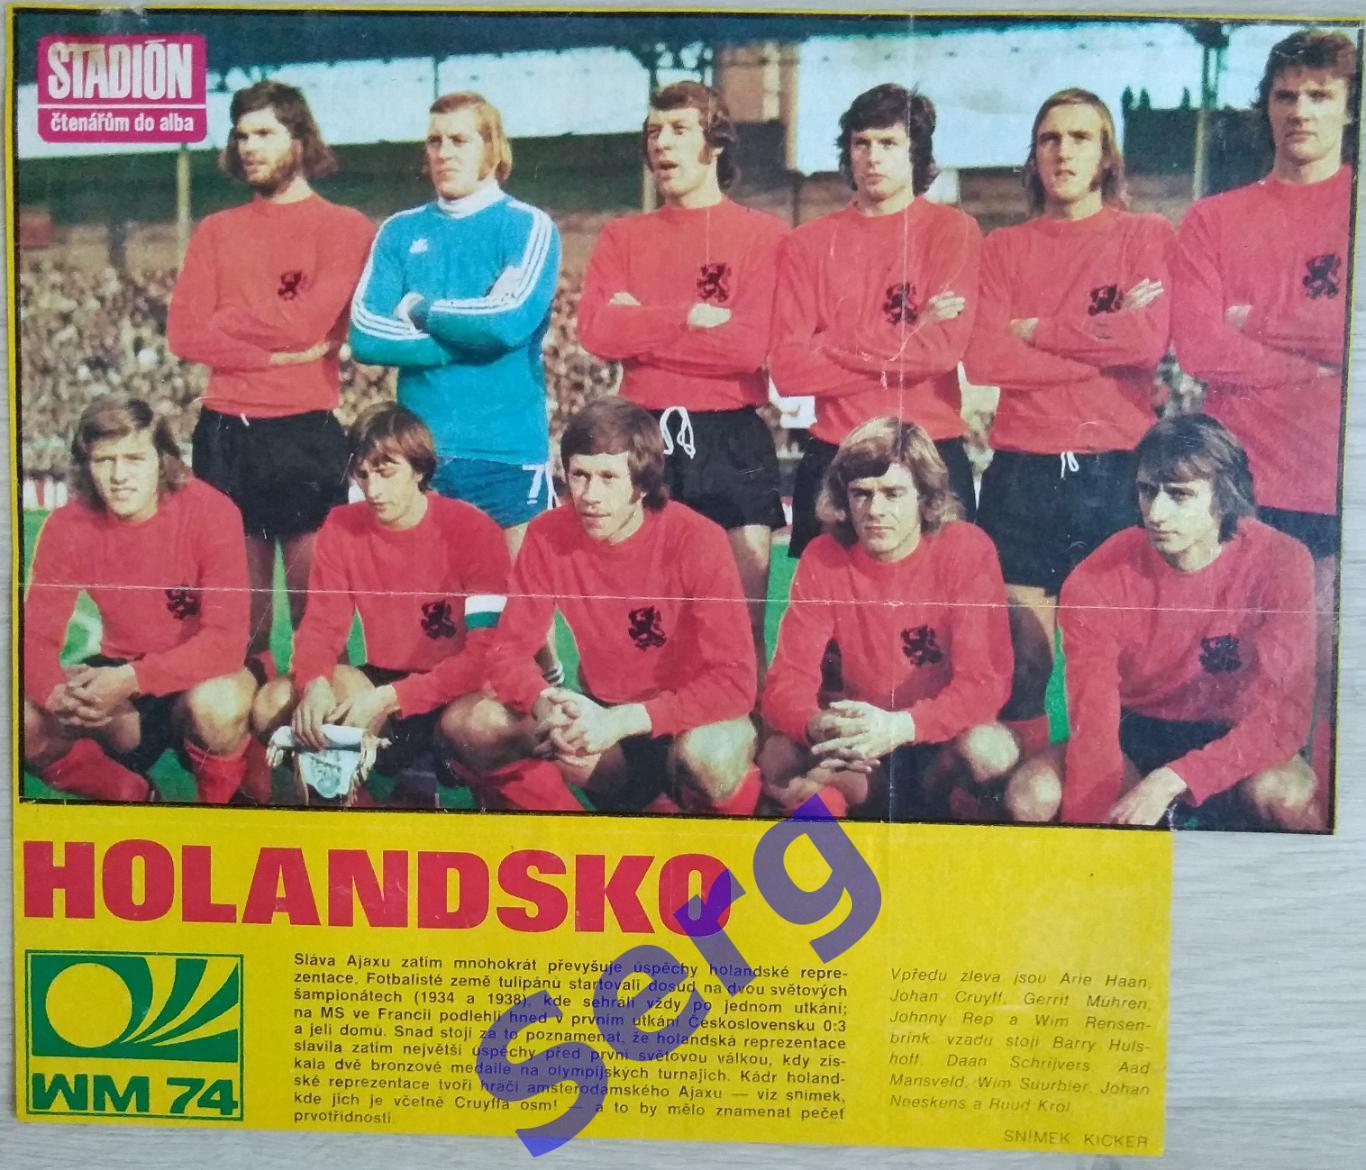 Постер Голландия из журнала Стадион (Stadion)